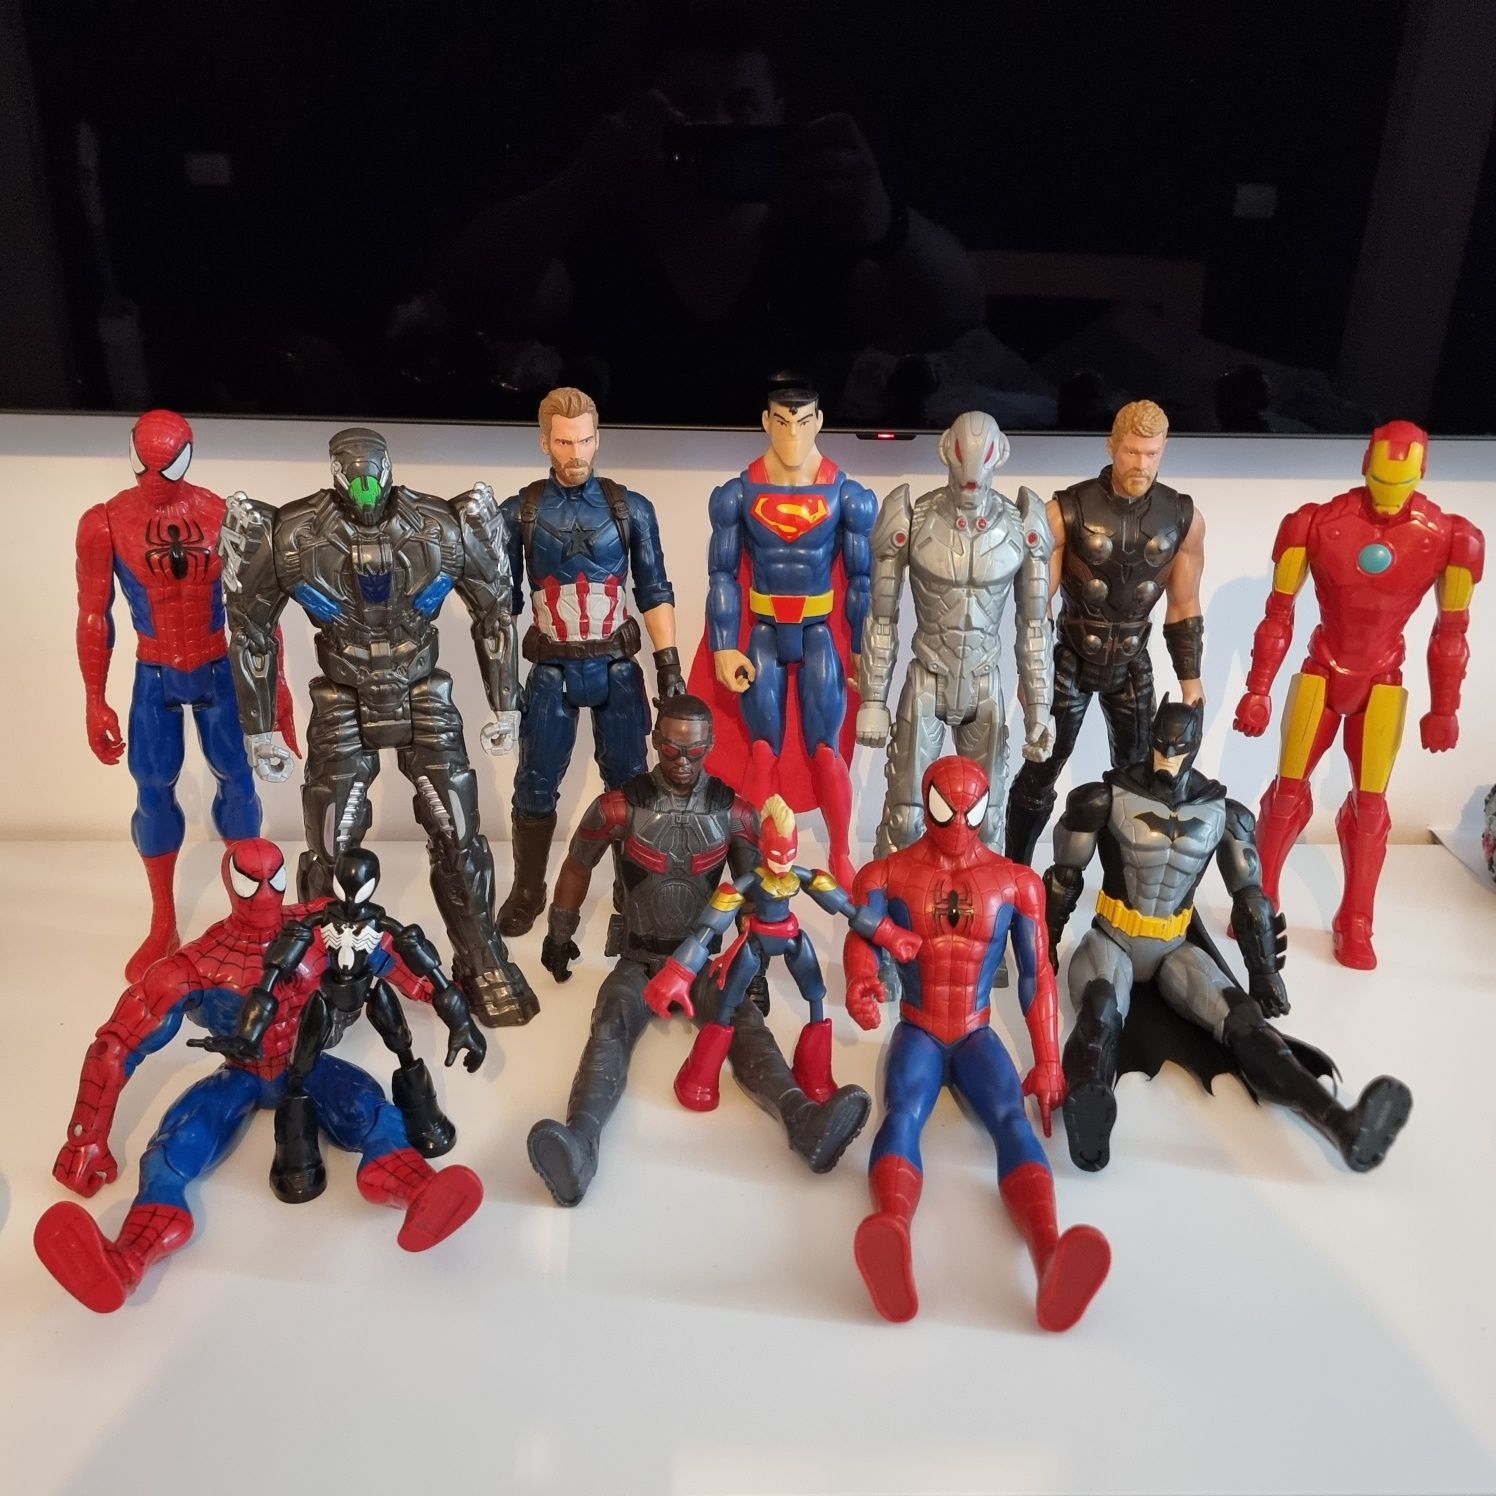 Superman, Thor, Spiderman, Batman, Transformers, Ironman, Avengers etc